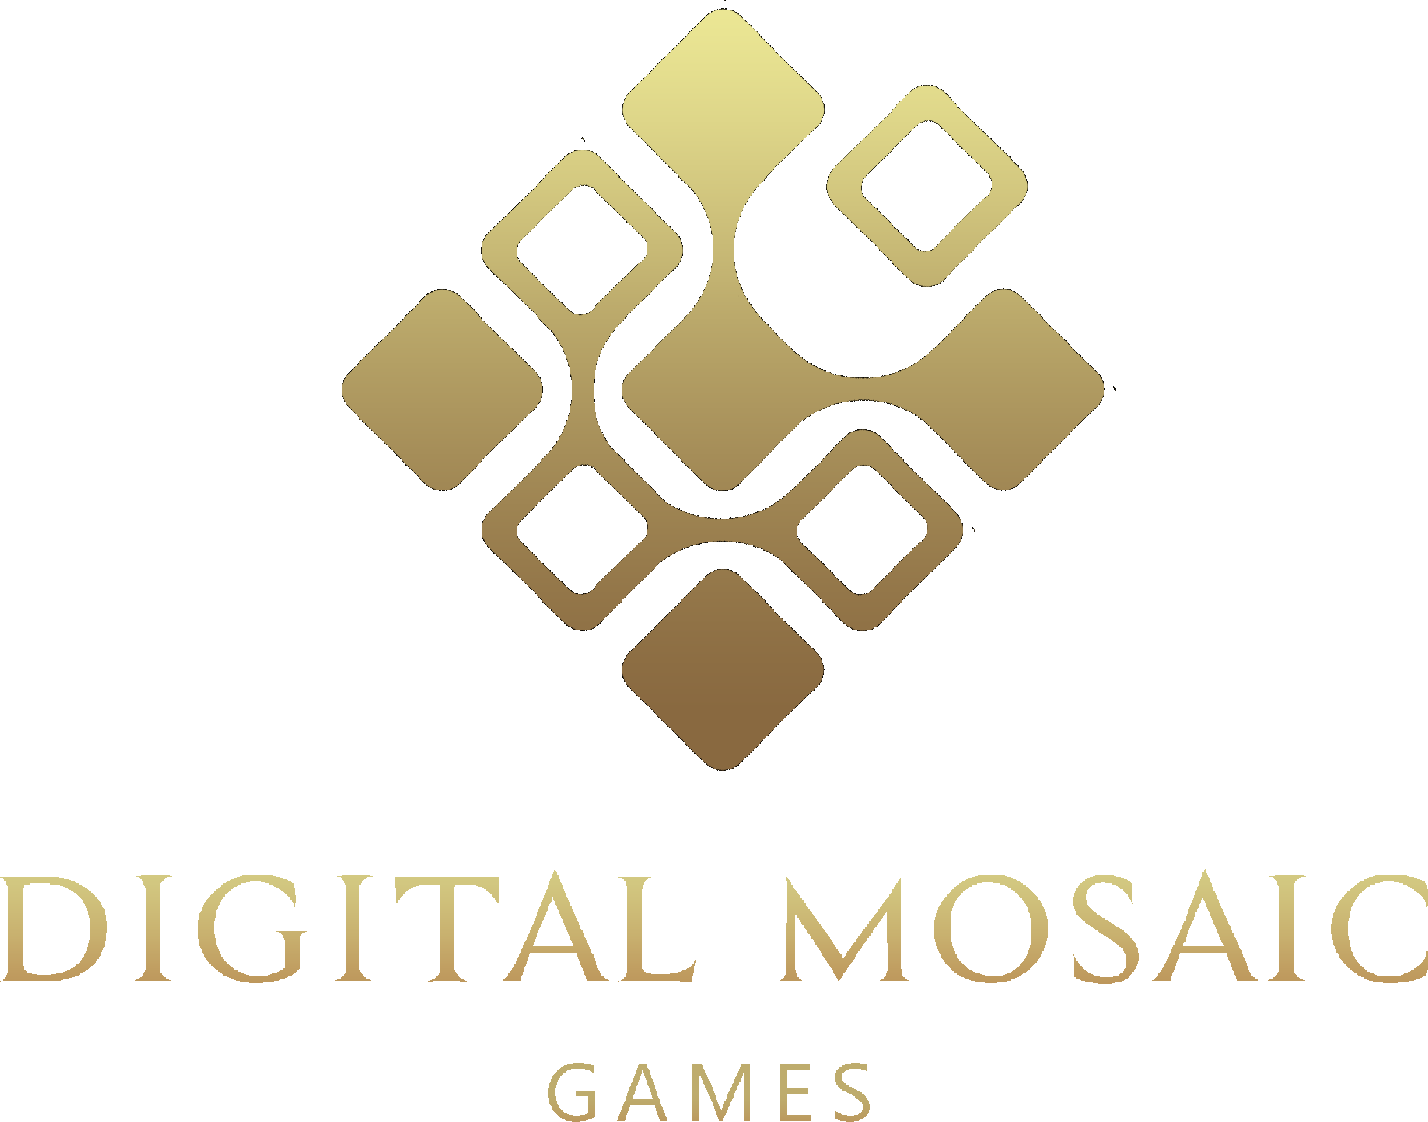 Digital Mosaic Games - Logo.png